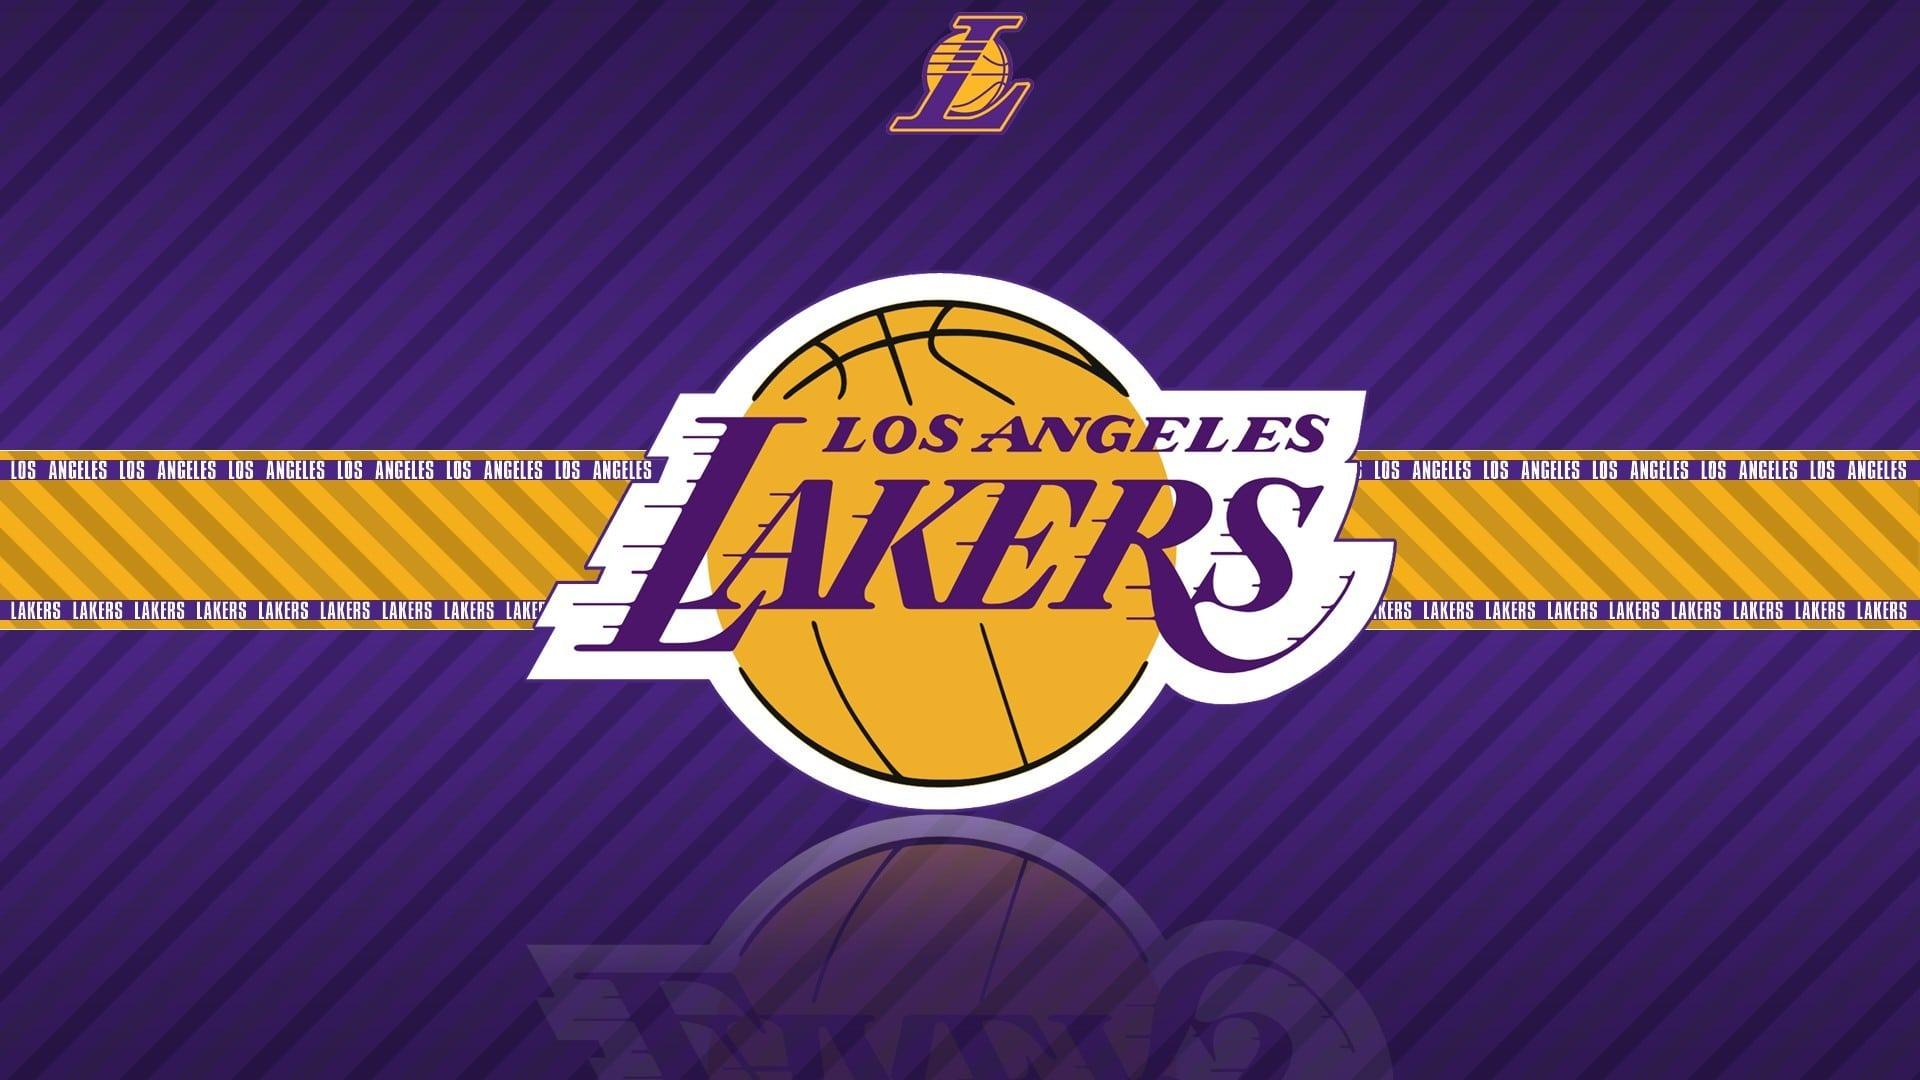 Los Angeles Lakers Wallpaper 1. Free Download HD Wallpaper 4k